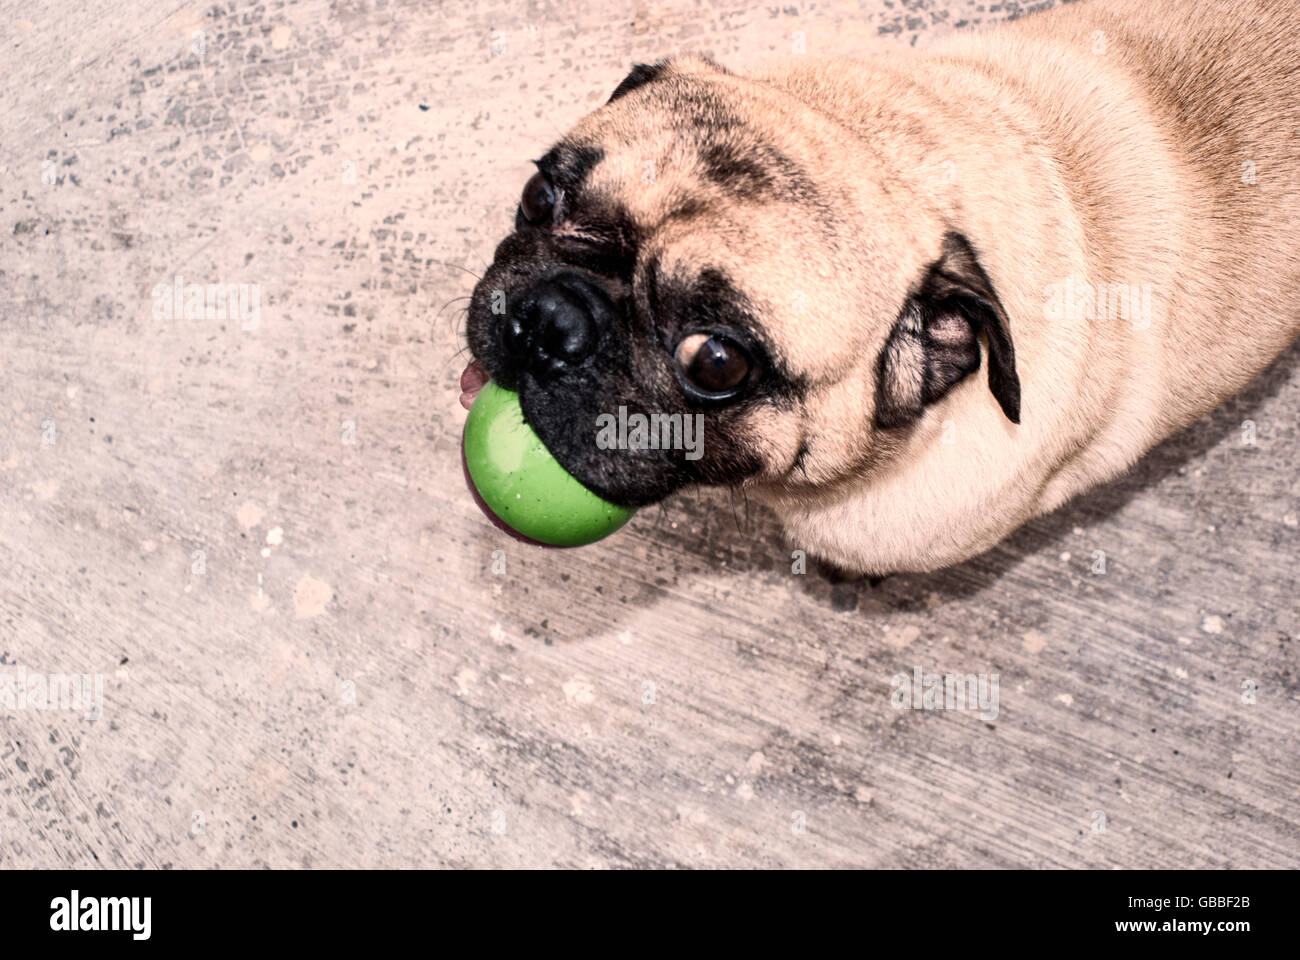 Nvthenpiaoliang Adorable Pug Dog With Funny Face Soft Standard Practice Ball Baseball Game Ball 